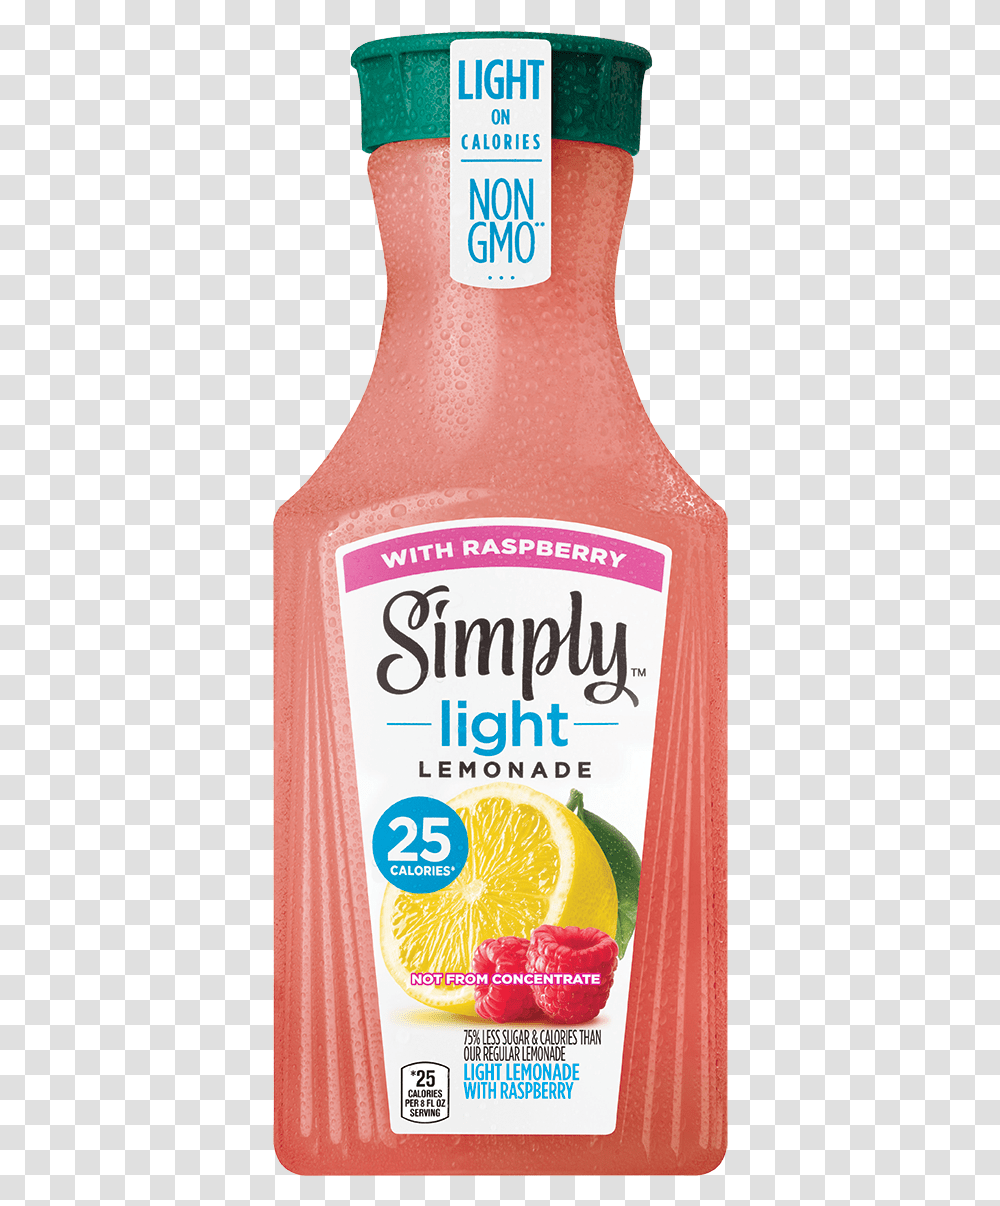 Simply Light Lemonade With Raspberry Orange Juice Bottle, Beverage, Drink, Food, Beer Transparent Png